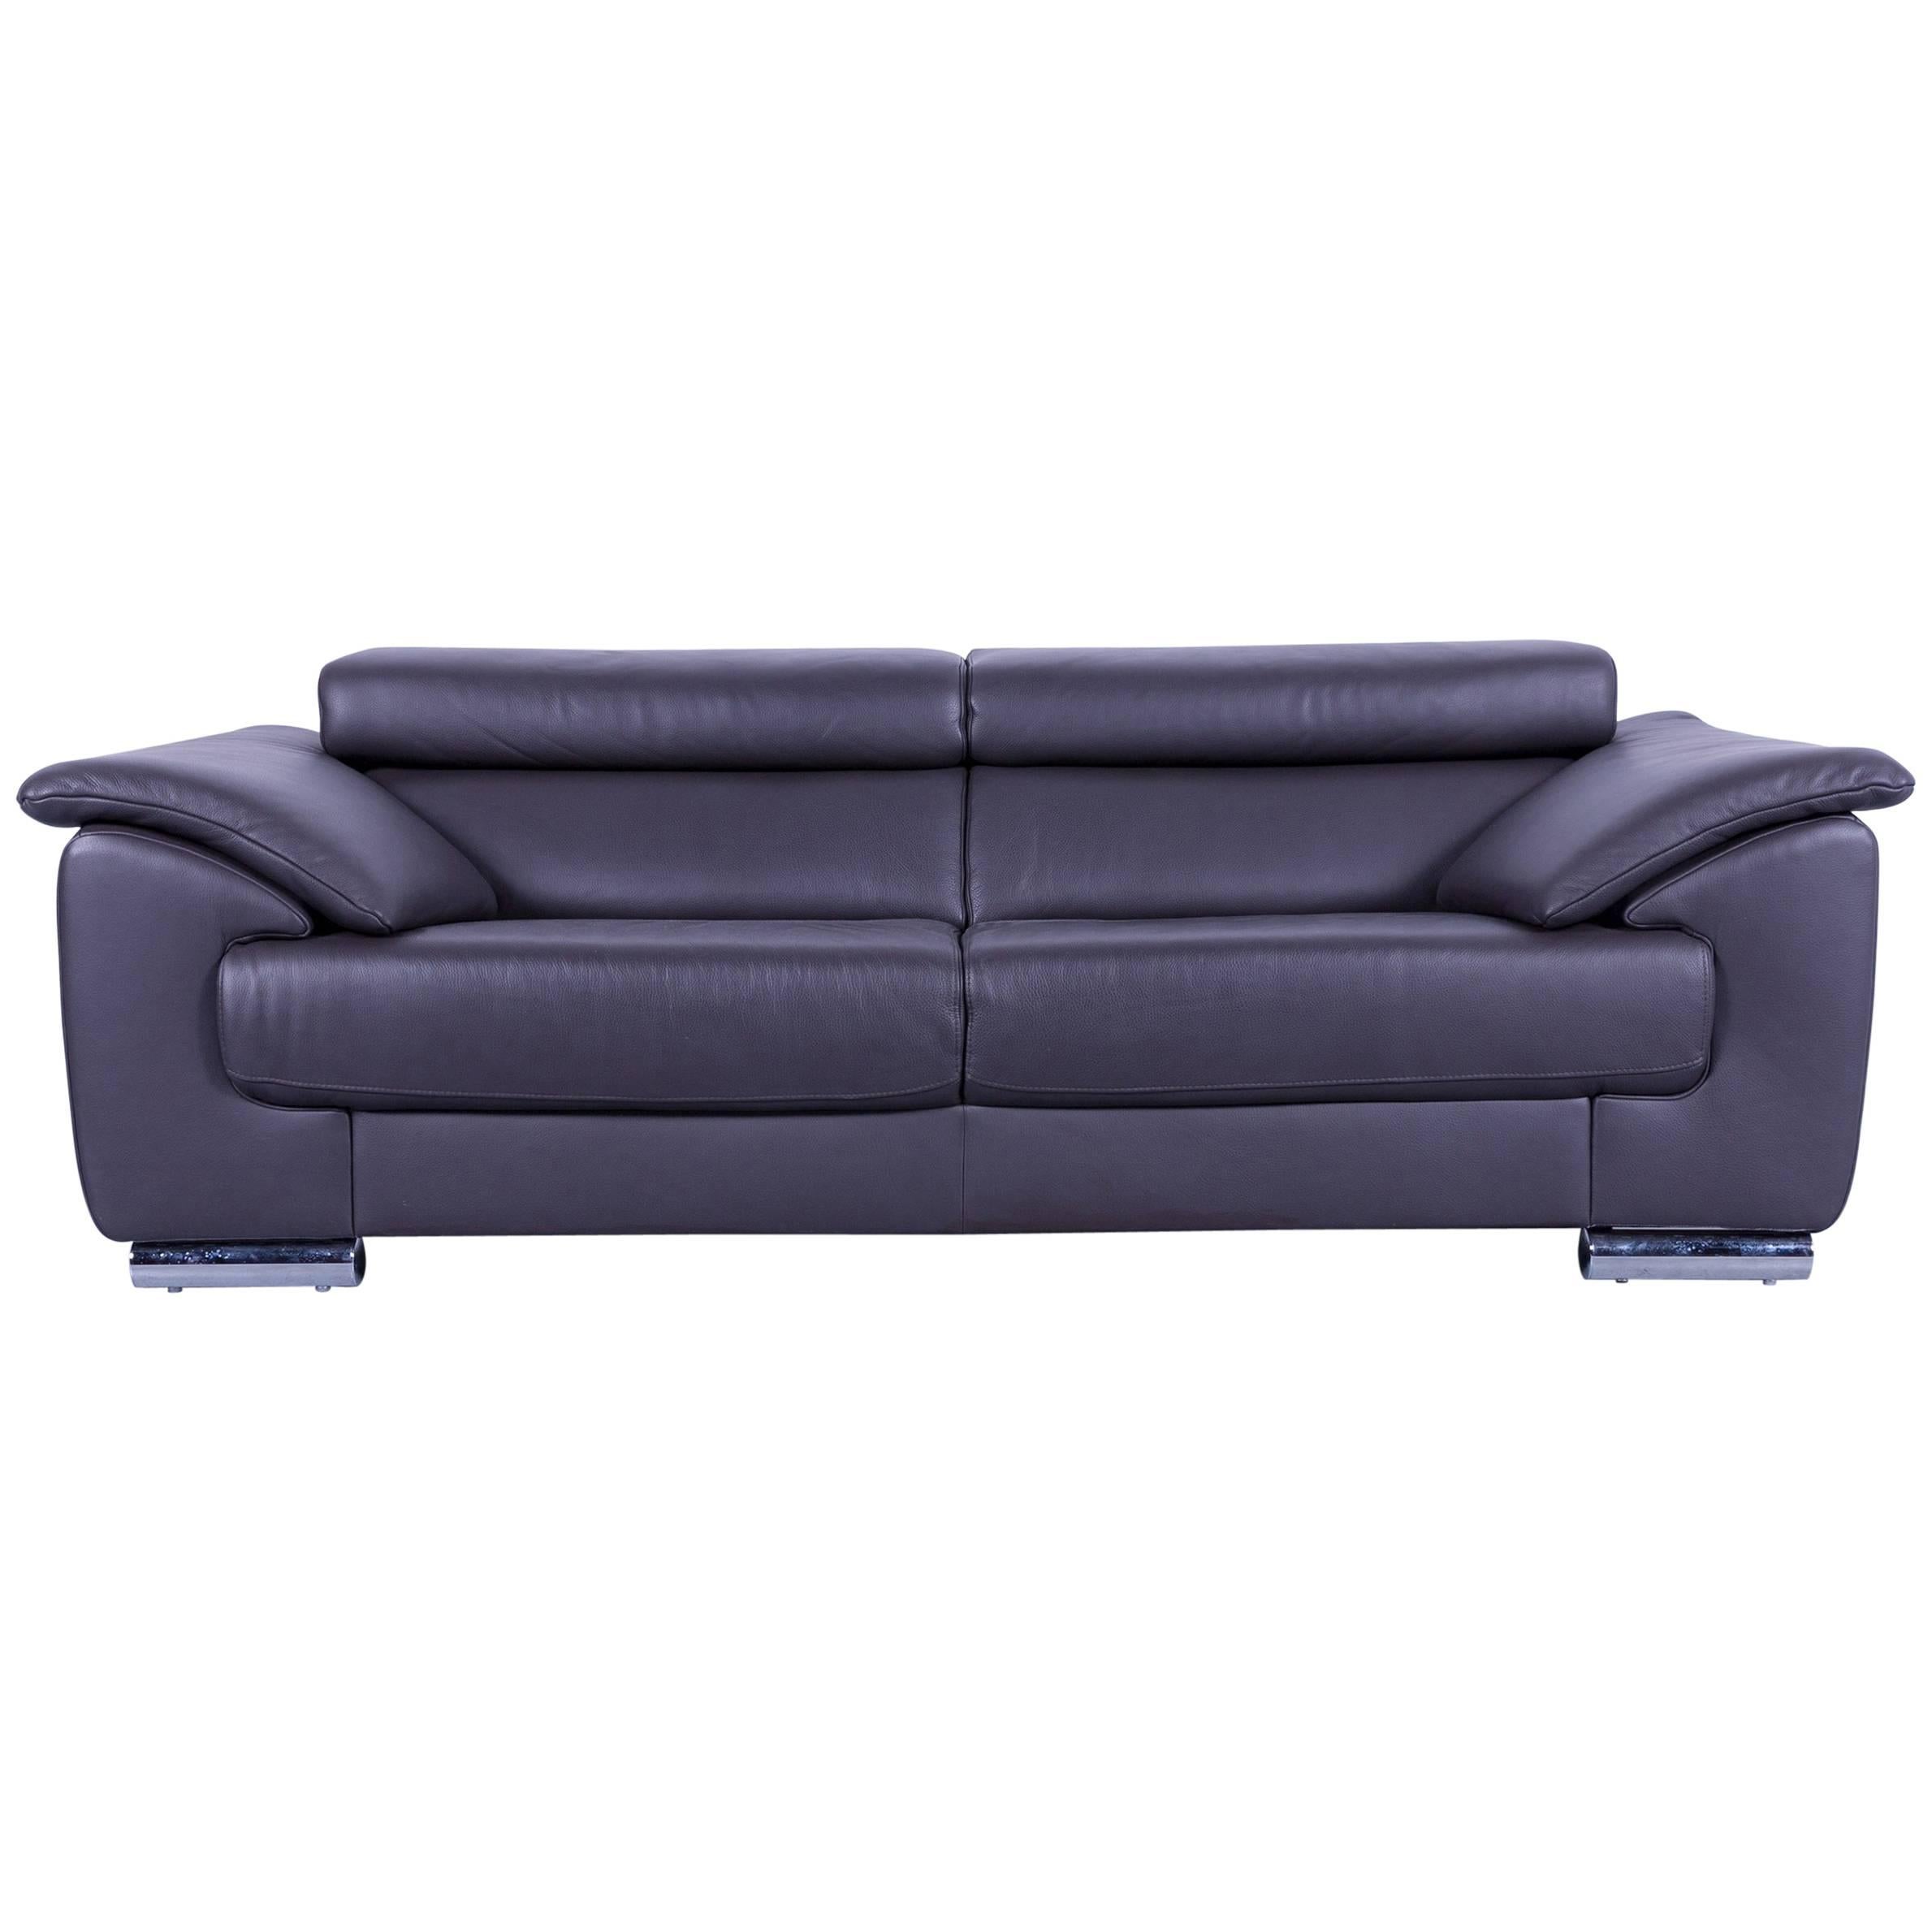 Ewald Schillig Brand Blues Designer Sofa Anthracite Grey Brown Leather Couch